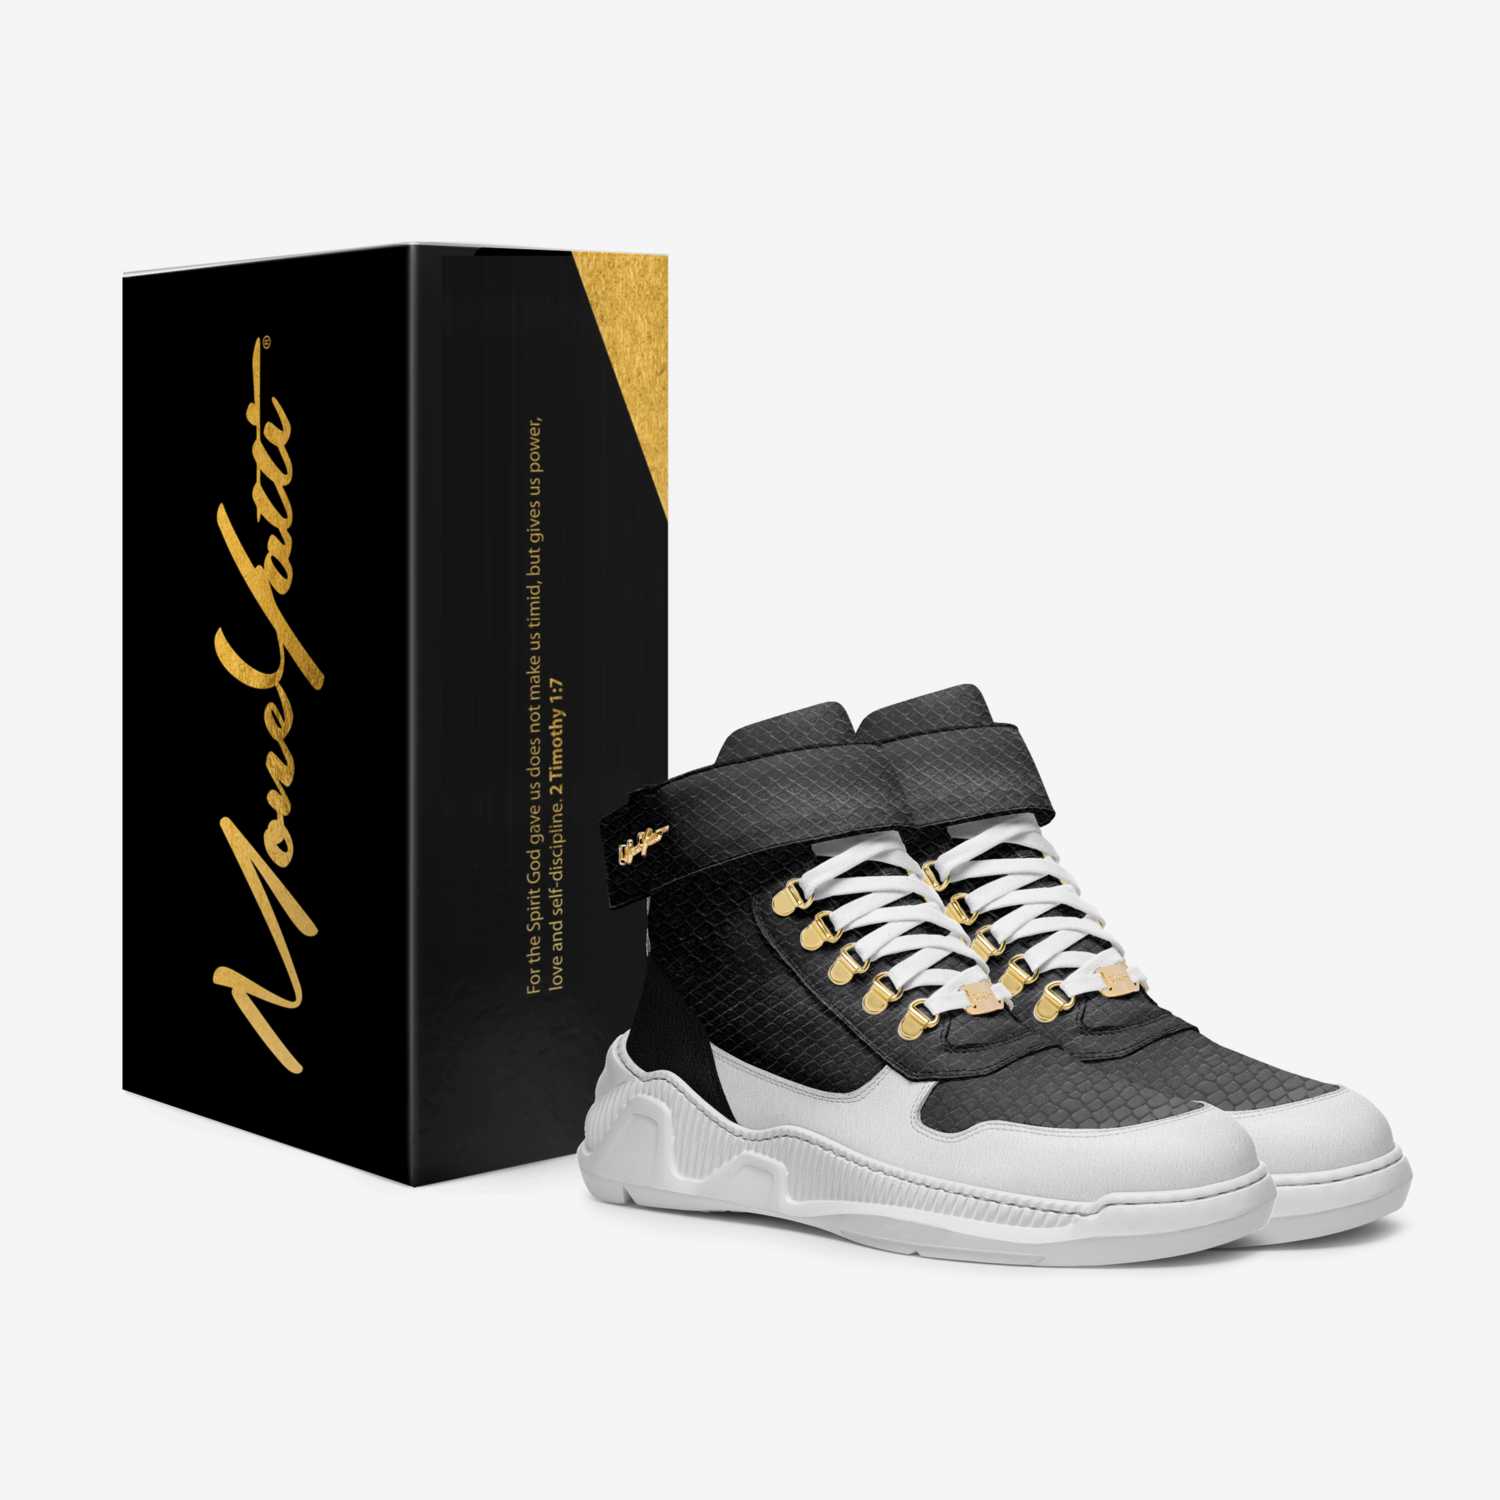 Moneyatti Traps02 custom made in Italy shoes by Moneyatti Brand | Box view